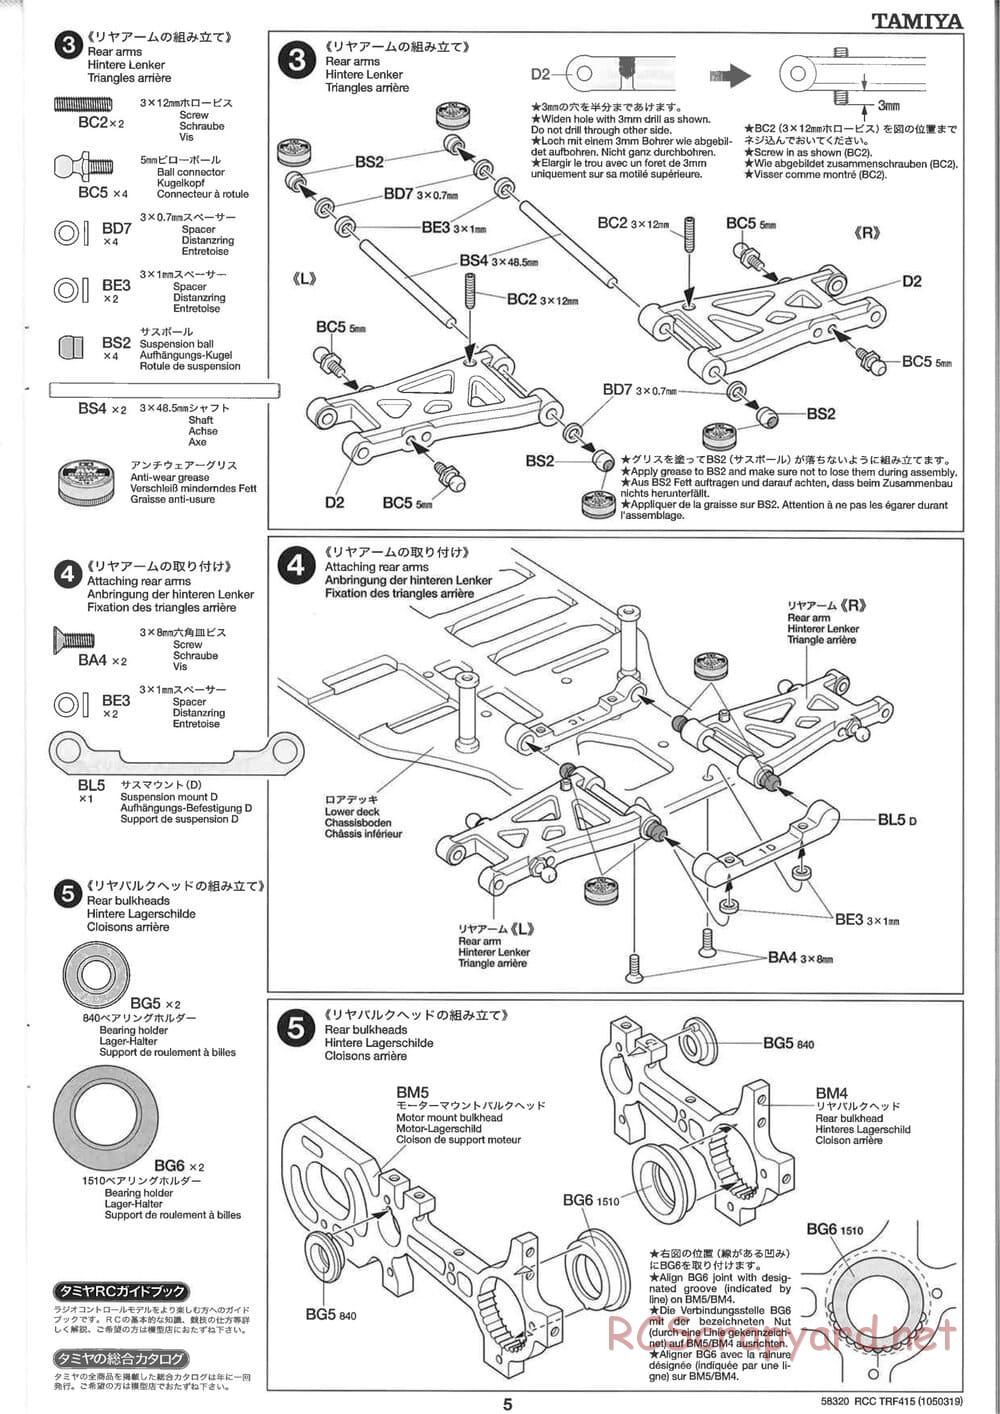 Tamiya - TRF415 Chassis - Manual - Page 5